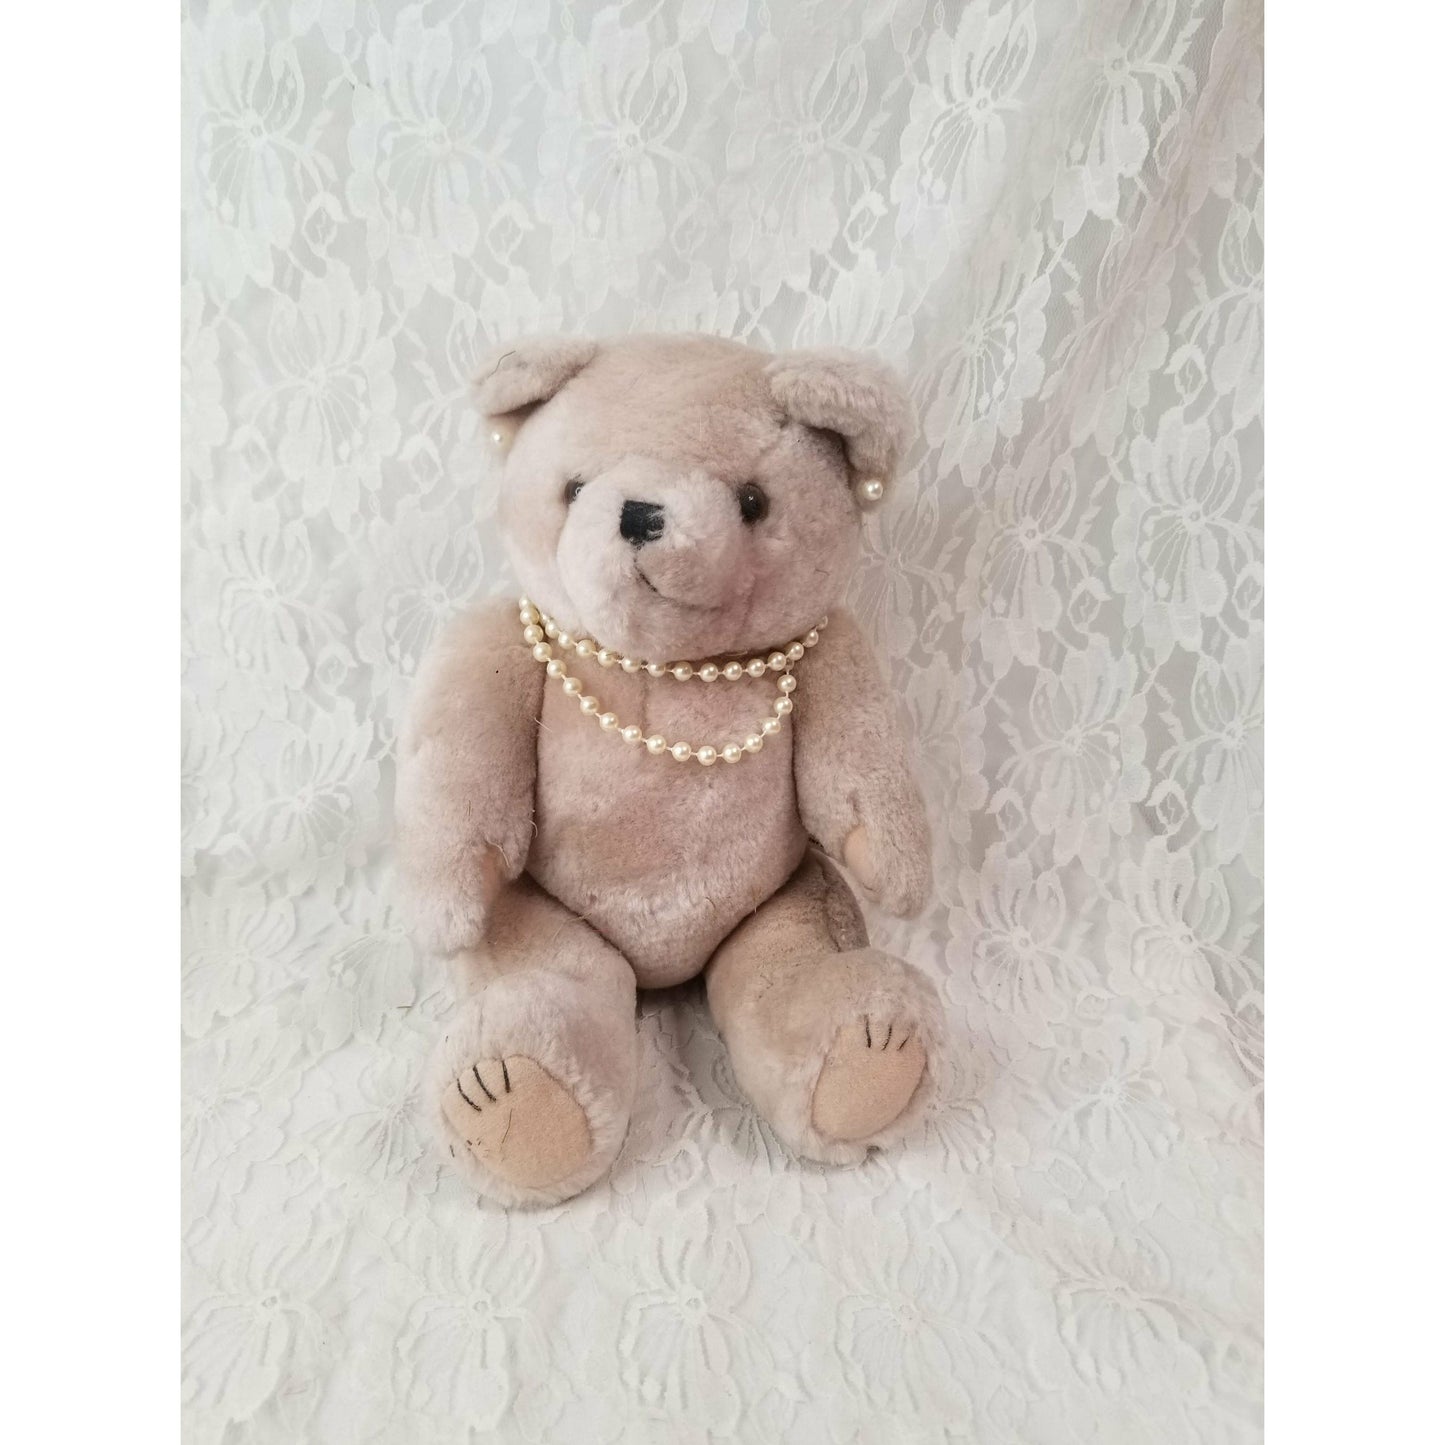 Handmade PLUSH Teddy Bear ~ OOAK Jointed Art Bear w/ Pearls ~ Ready for Dressing